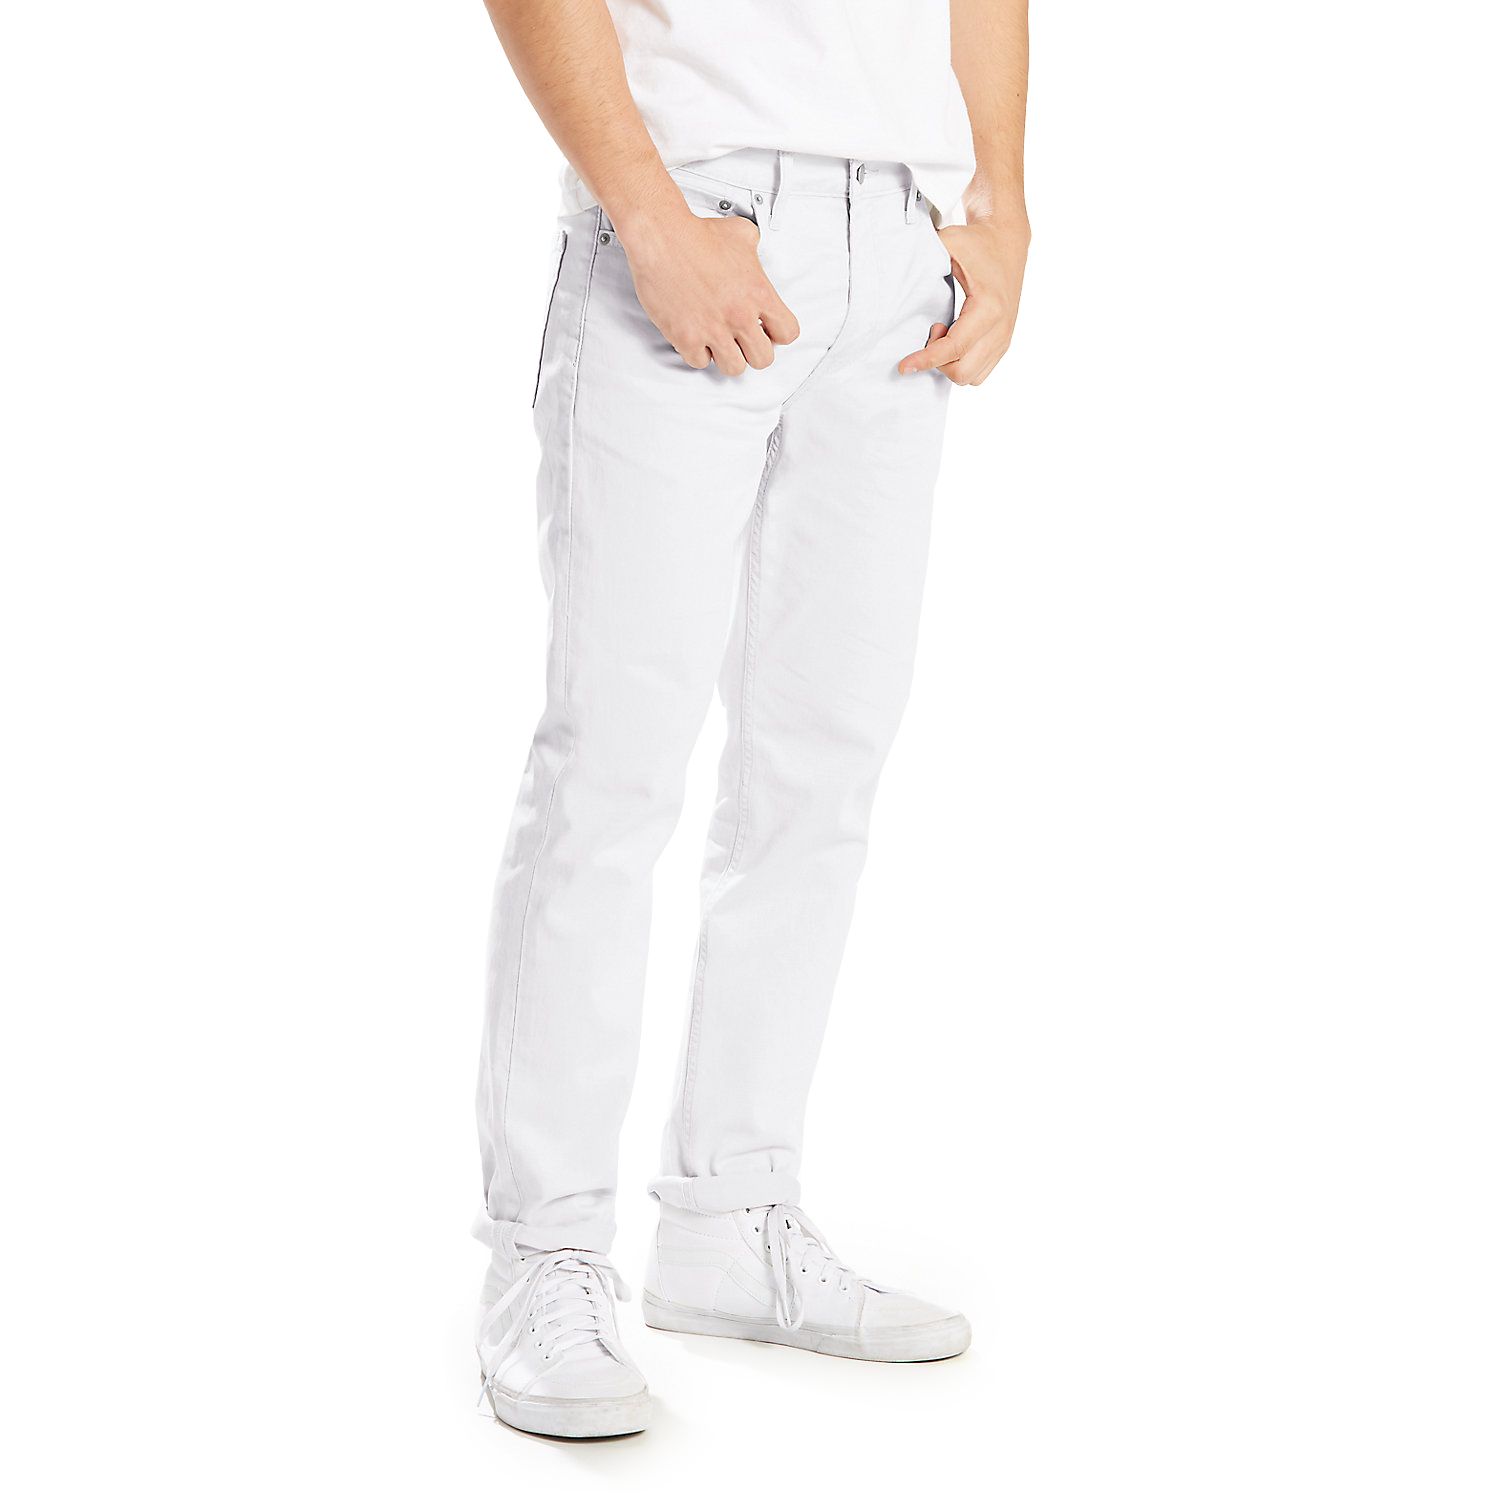 levis white jeans for men